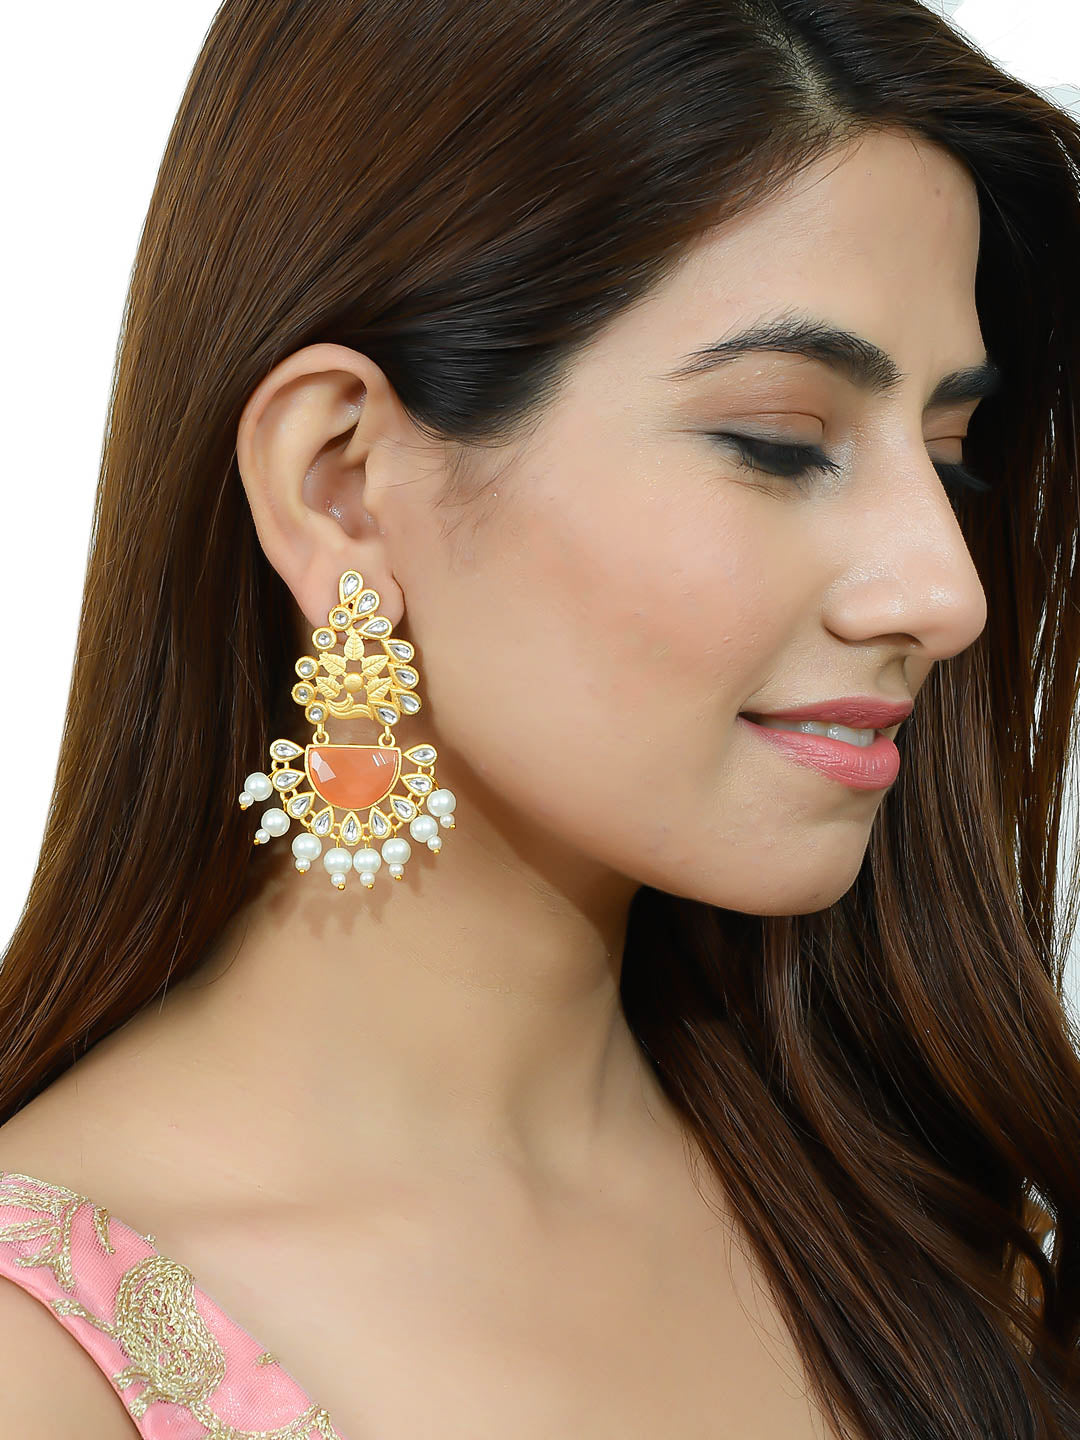 Traditional Ethnic Golden Orange Pearl Chandbali Earrings